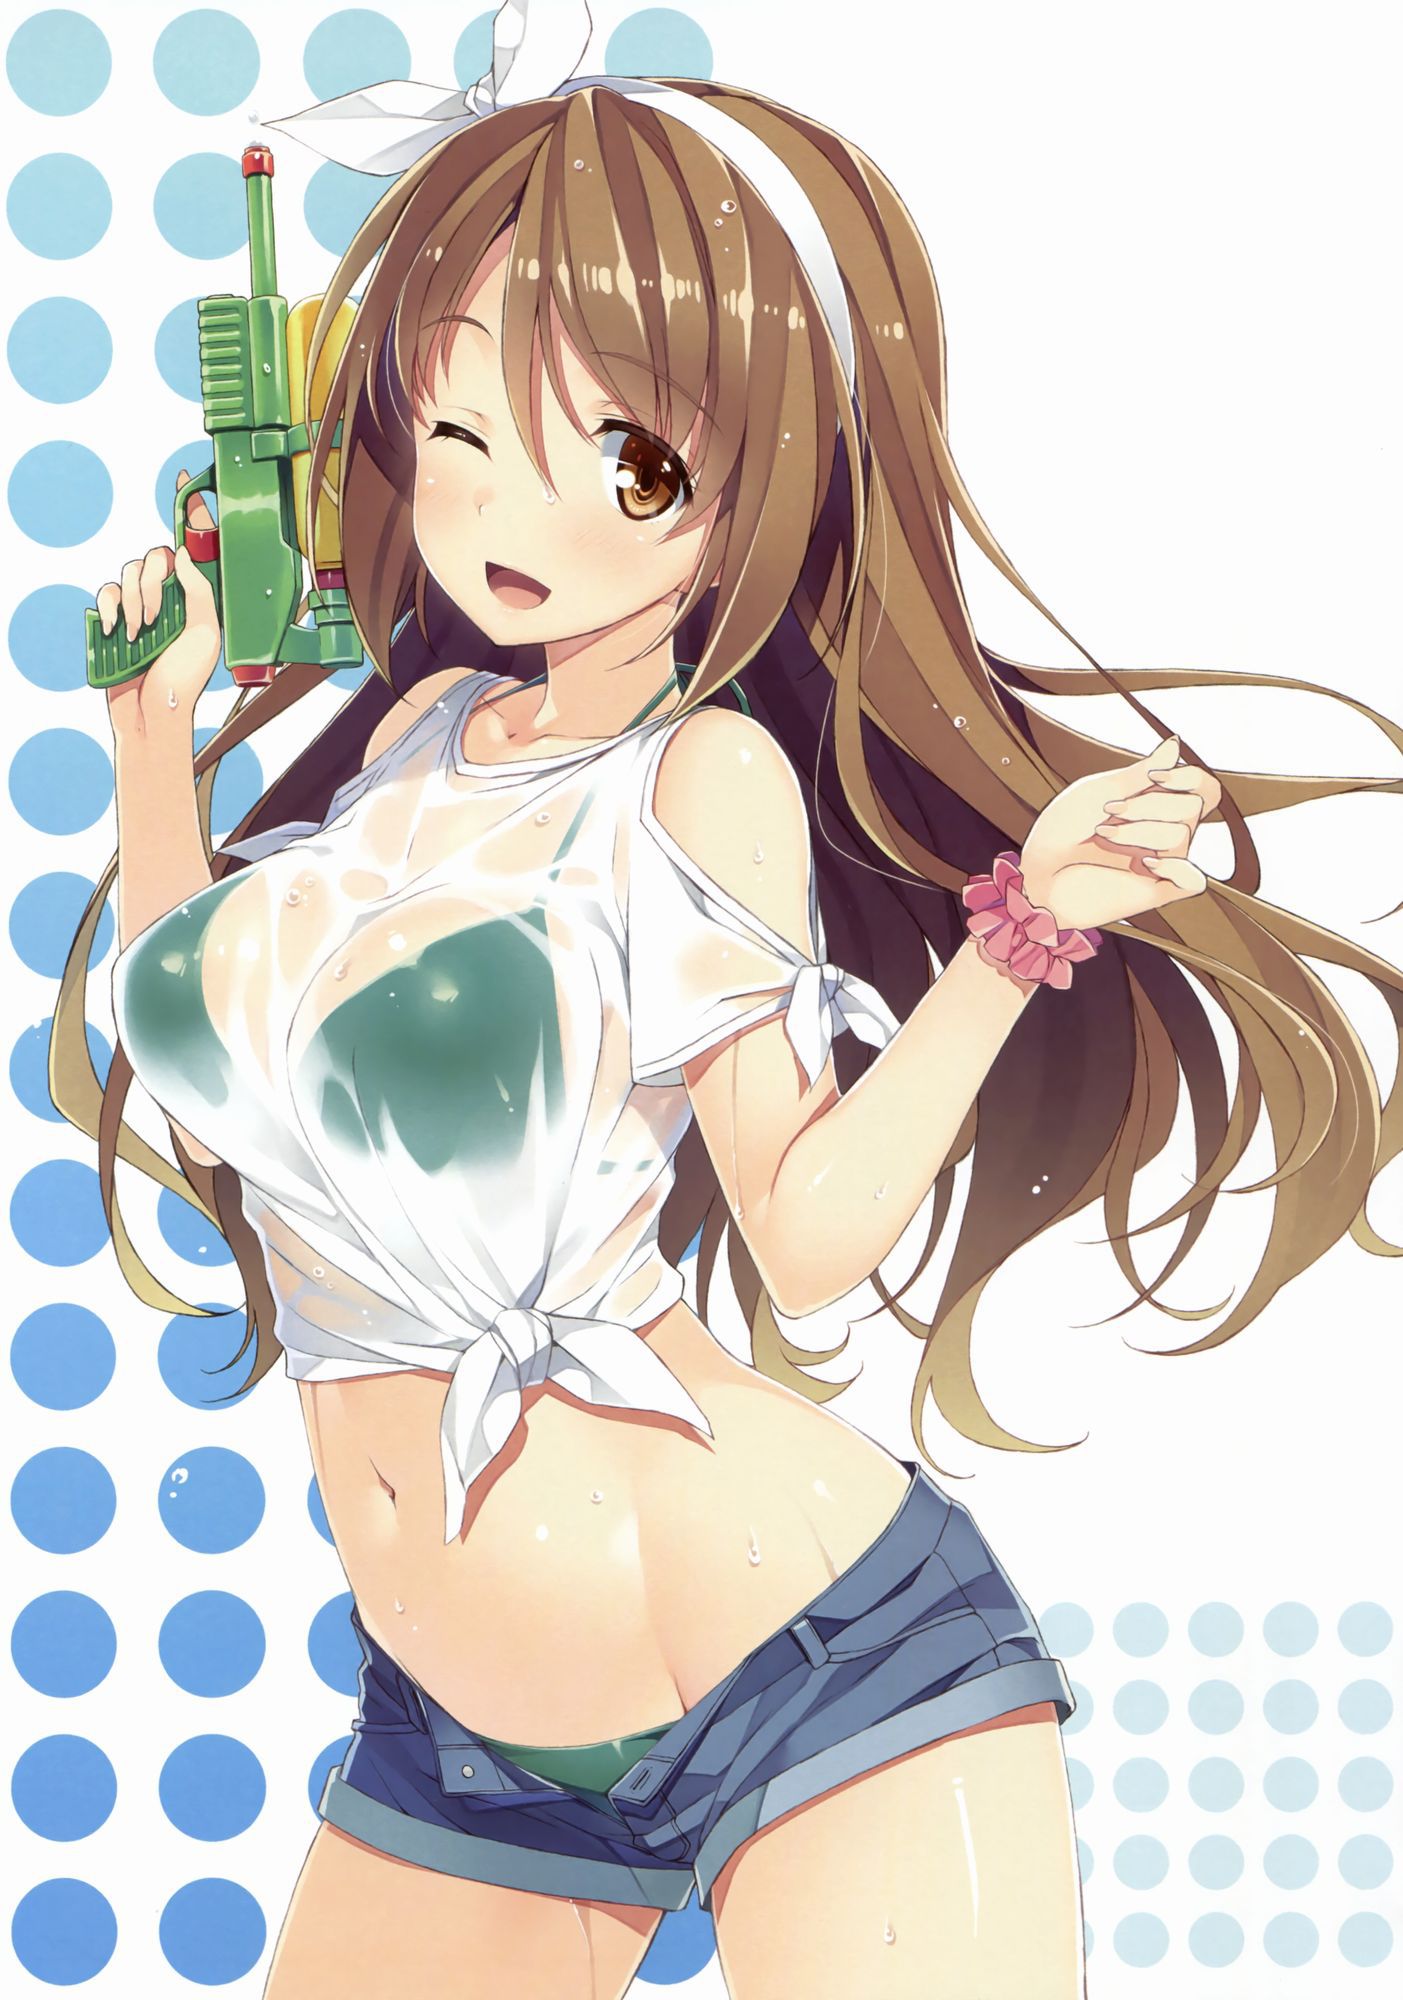 [Secondary/ZIP] Beautiful girl image summary of bikini top rather than bra 41